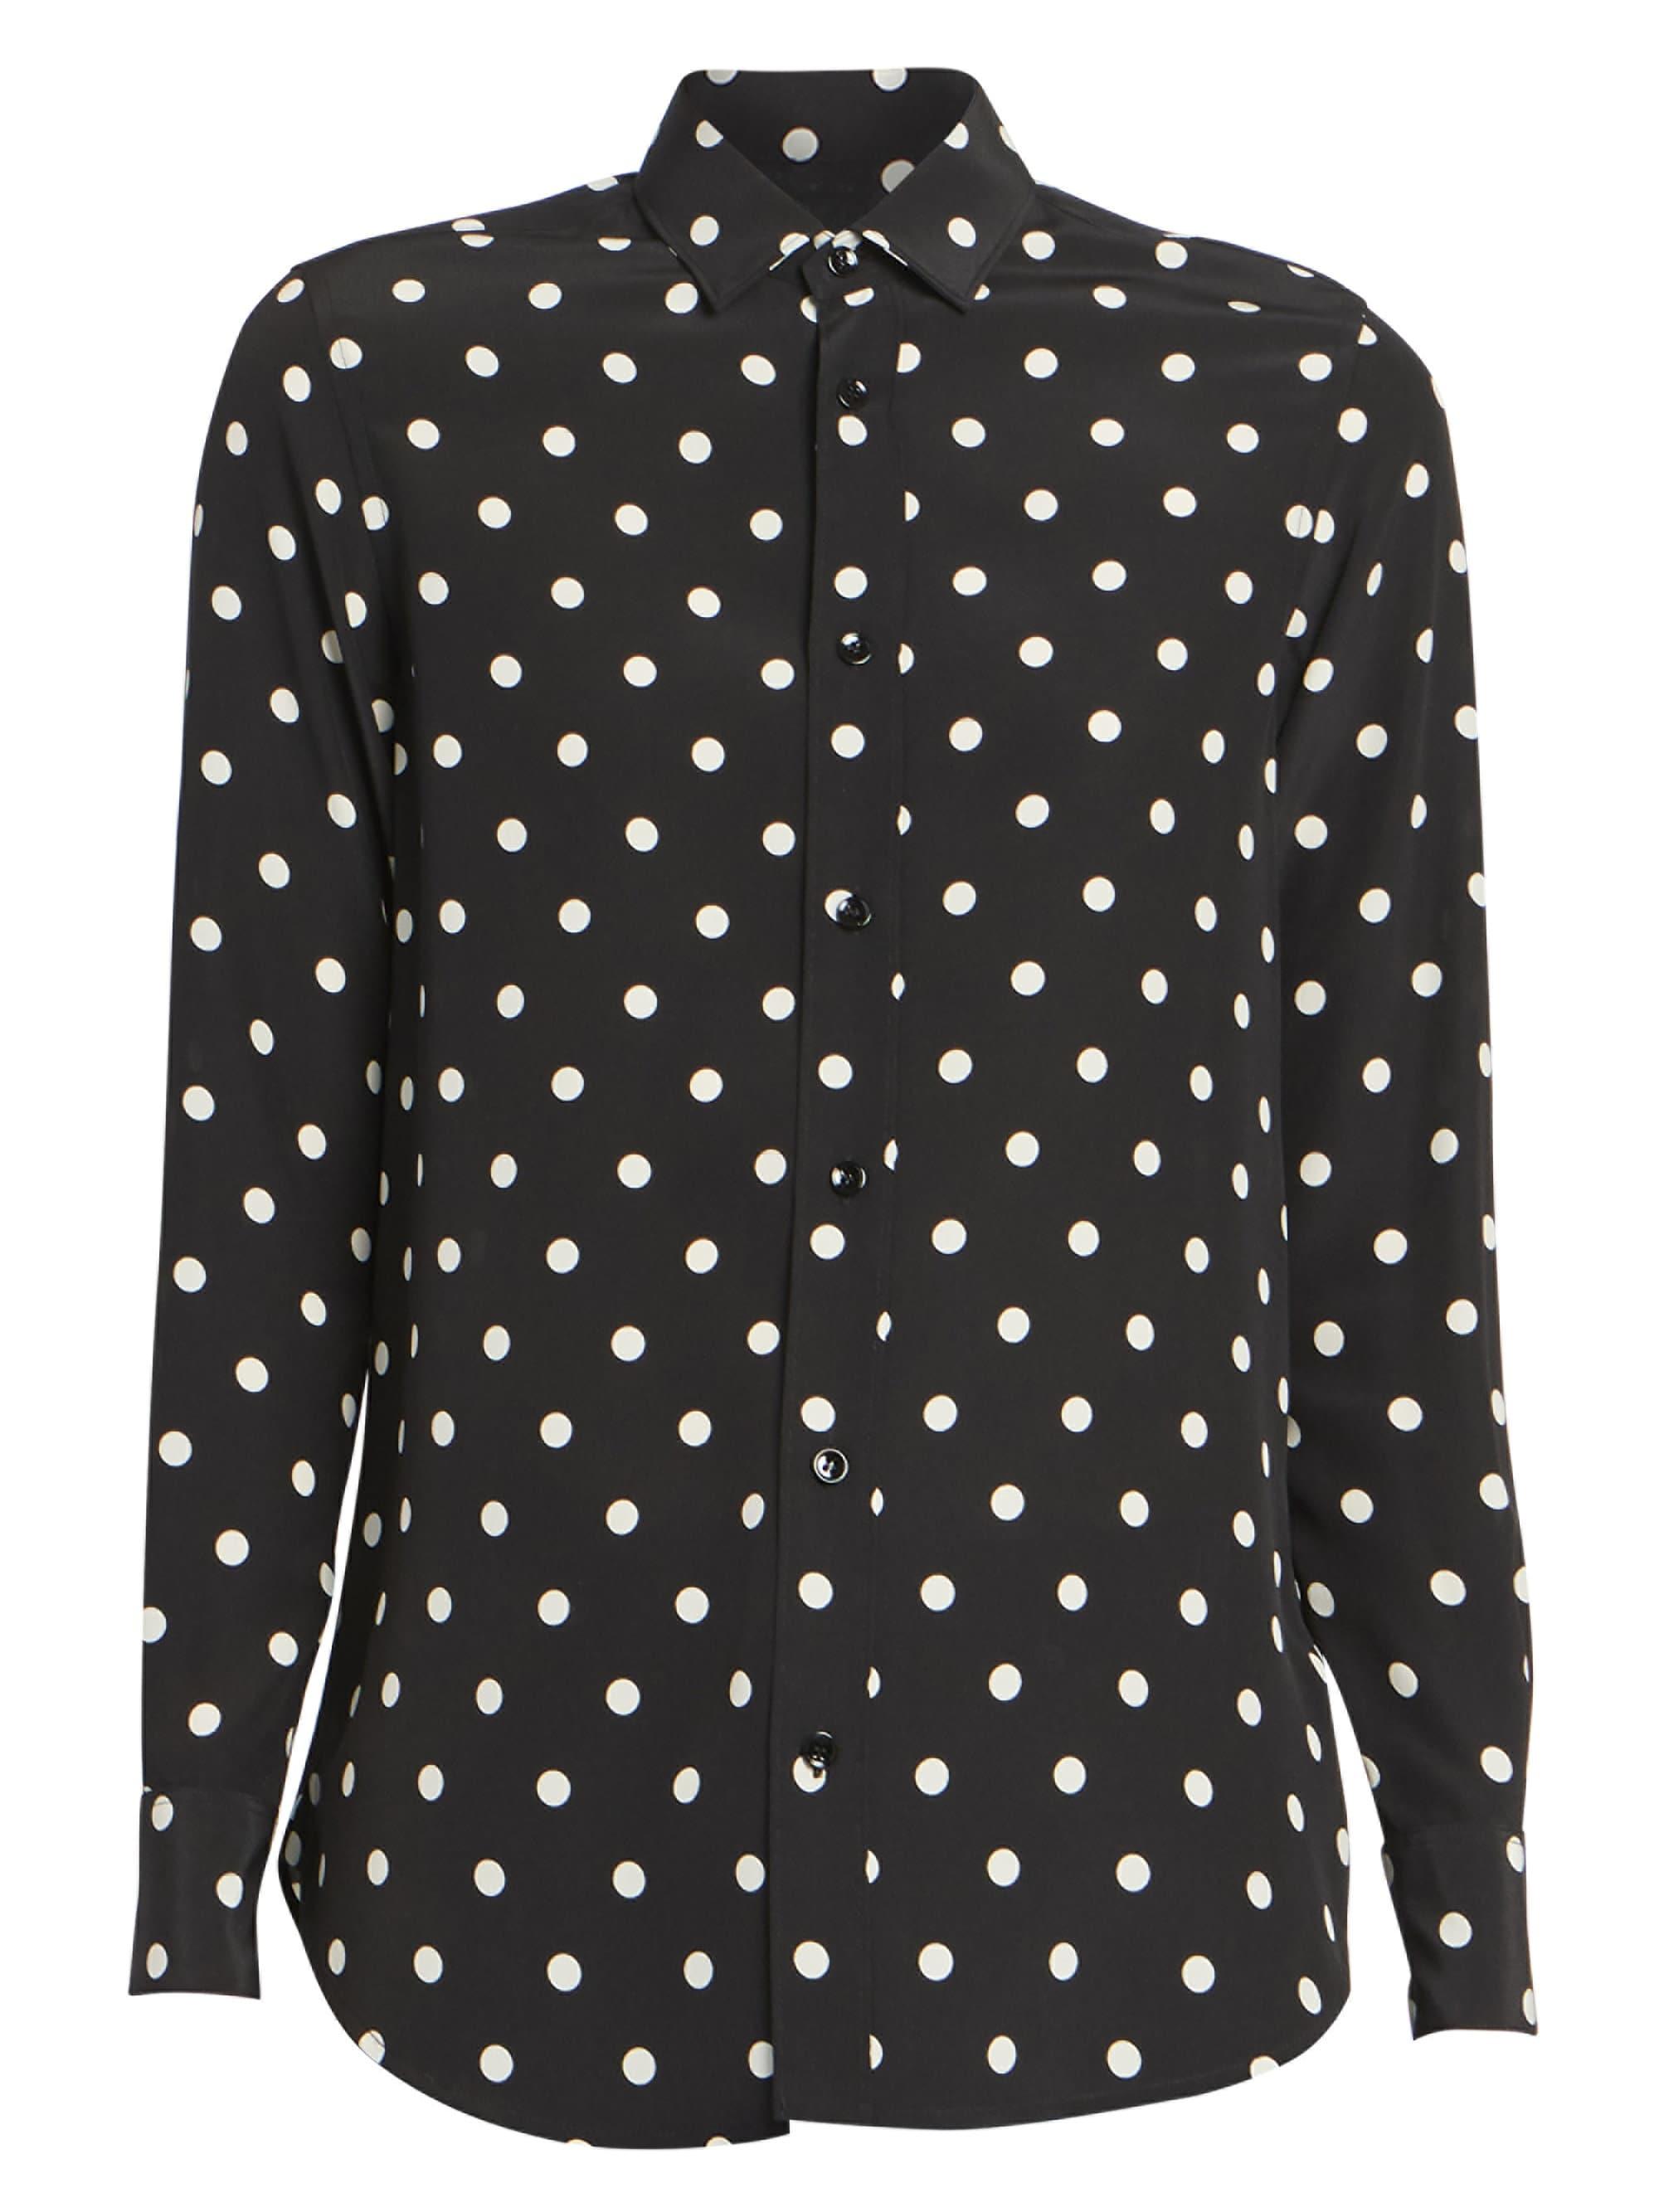 Saint Laurent Silk Polka Dot Shirt in Black - Lyst